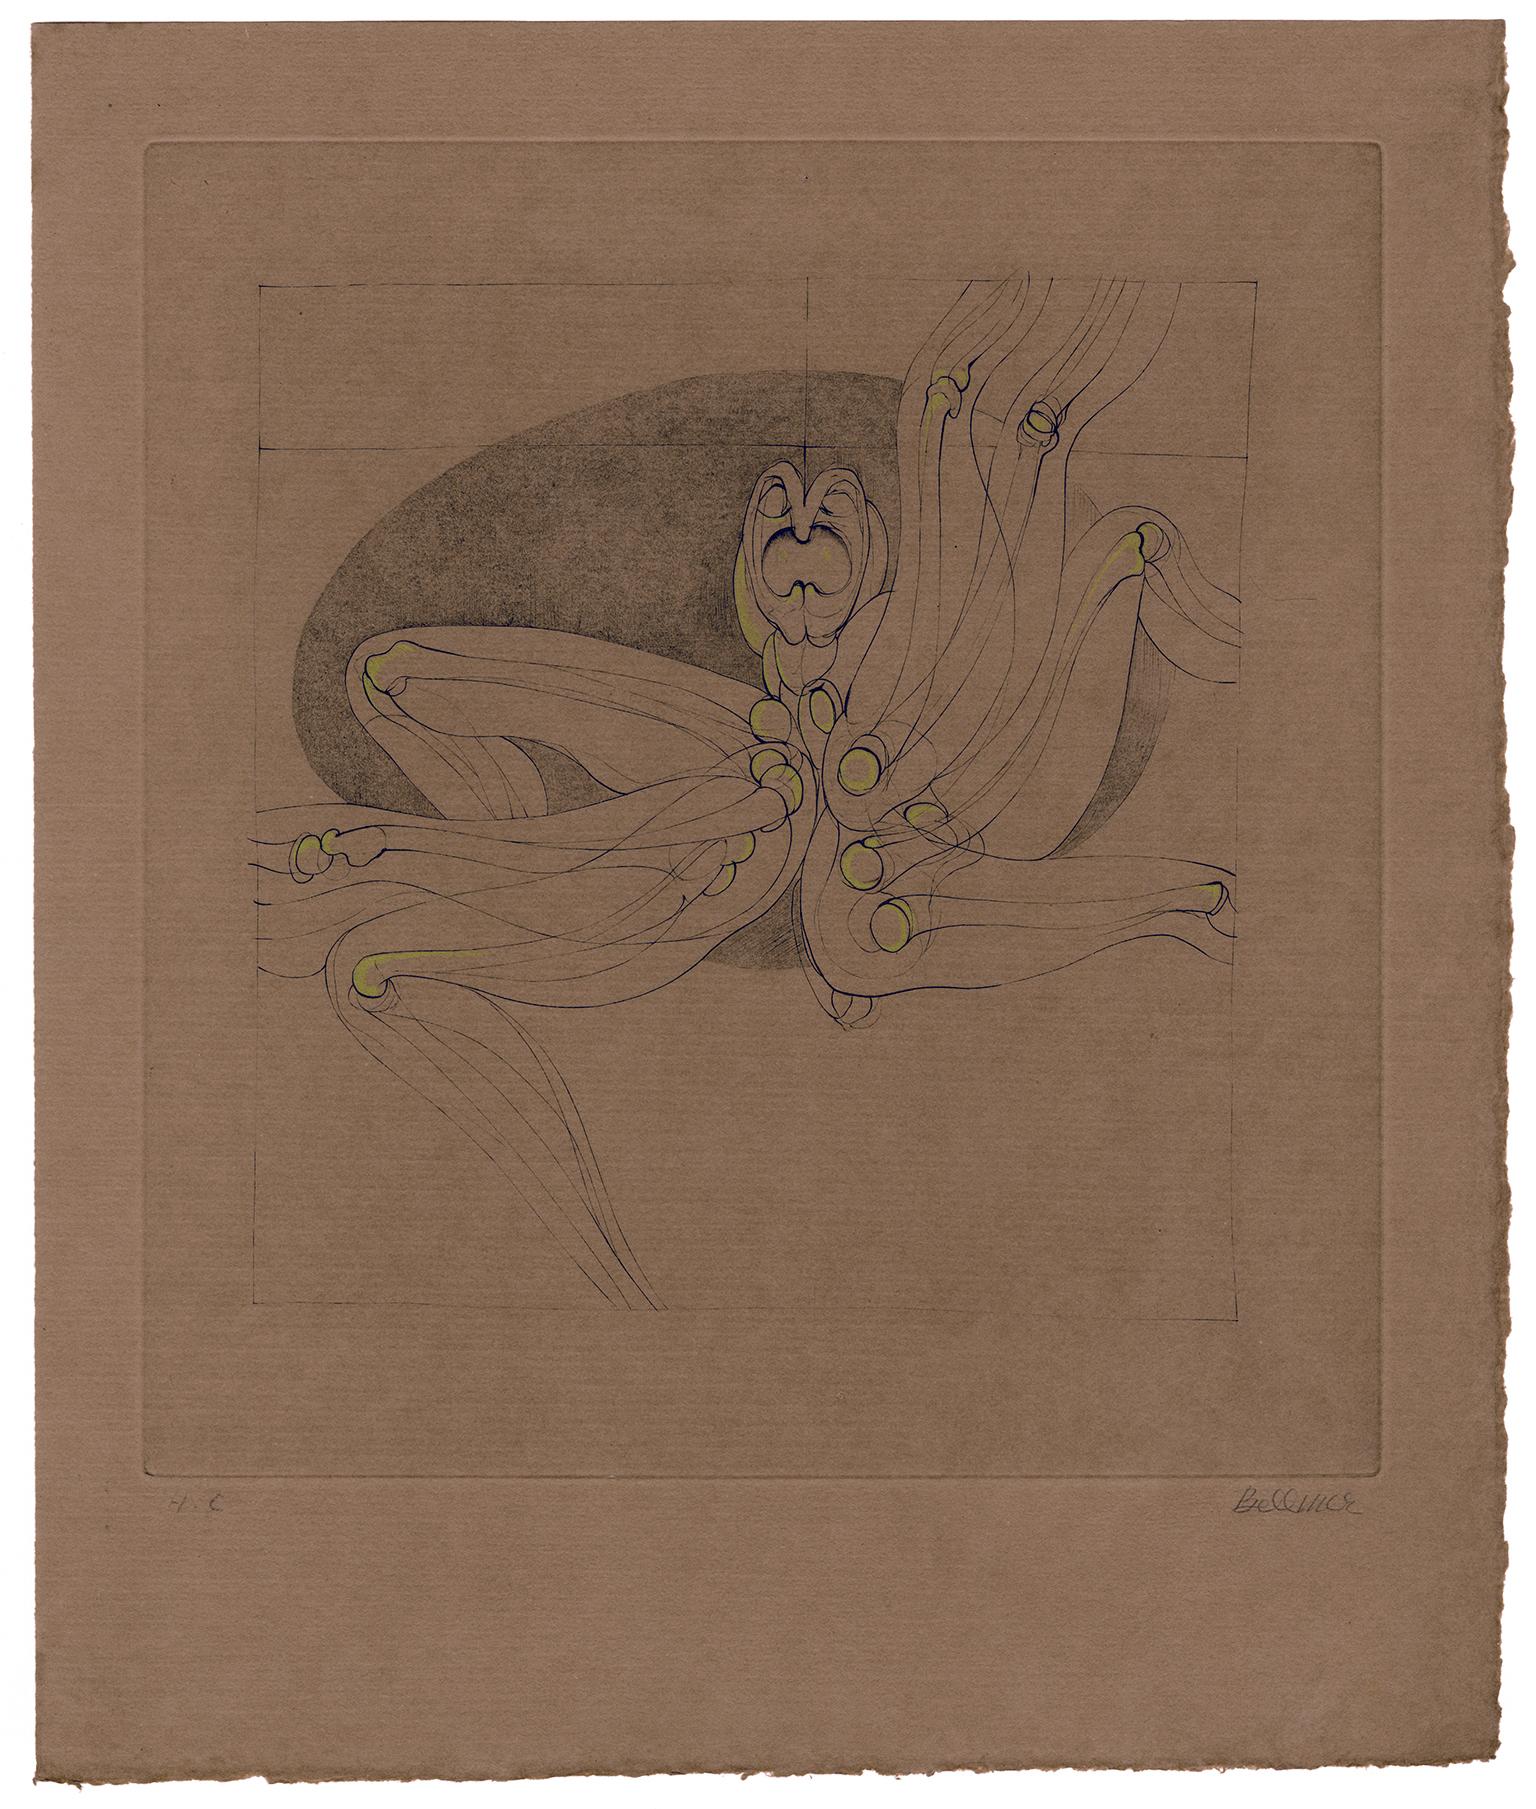 Les Marionettes I — 1960s Erotic Surrealism - Print by Hans Bellmer